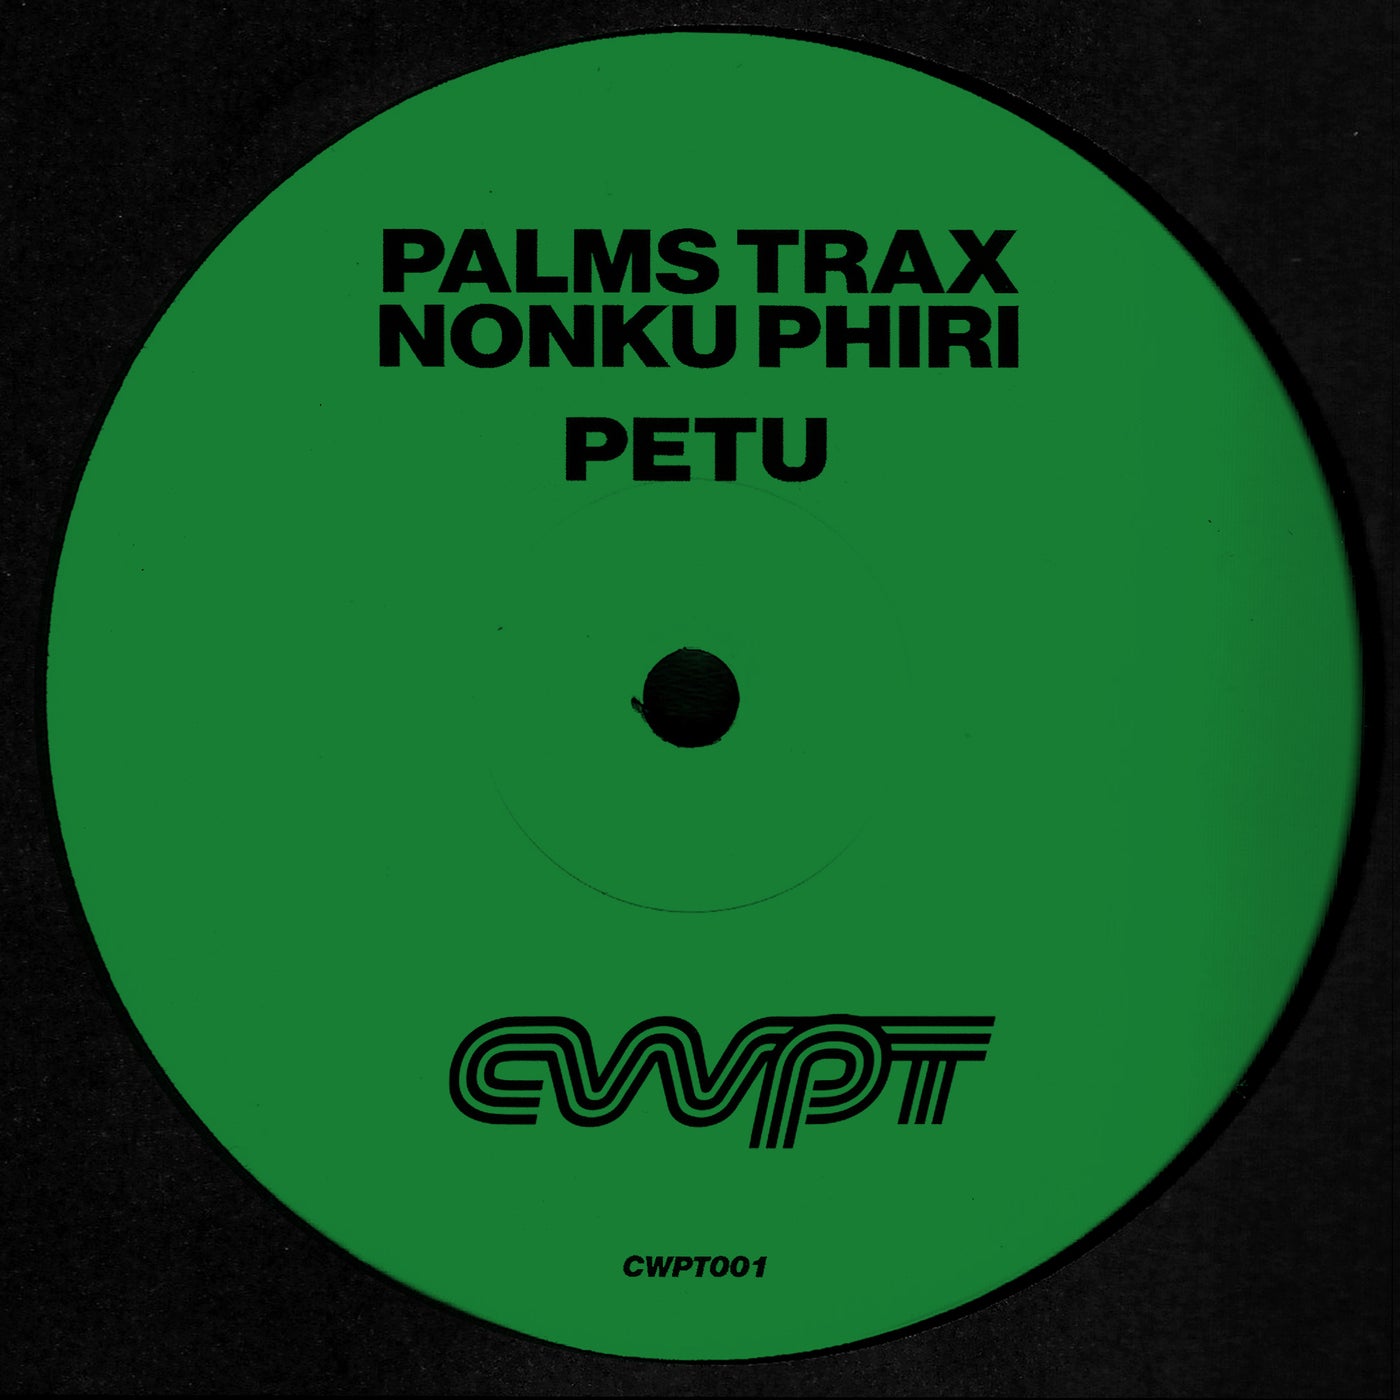 Download Petu EP on Electrobuzz